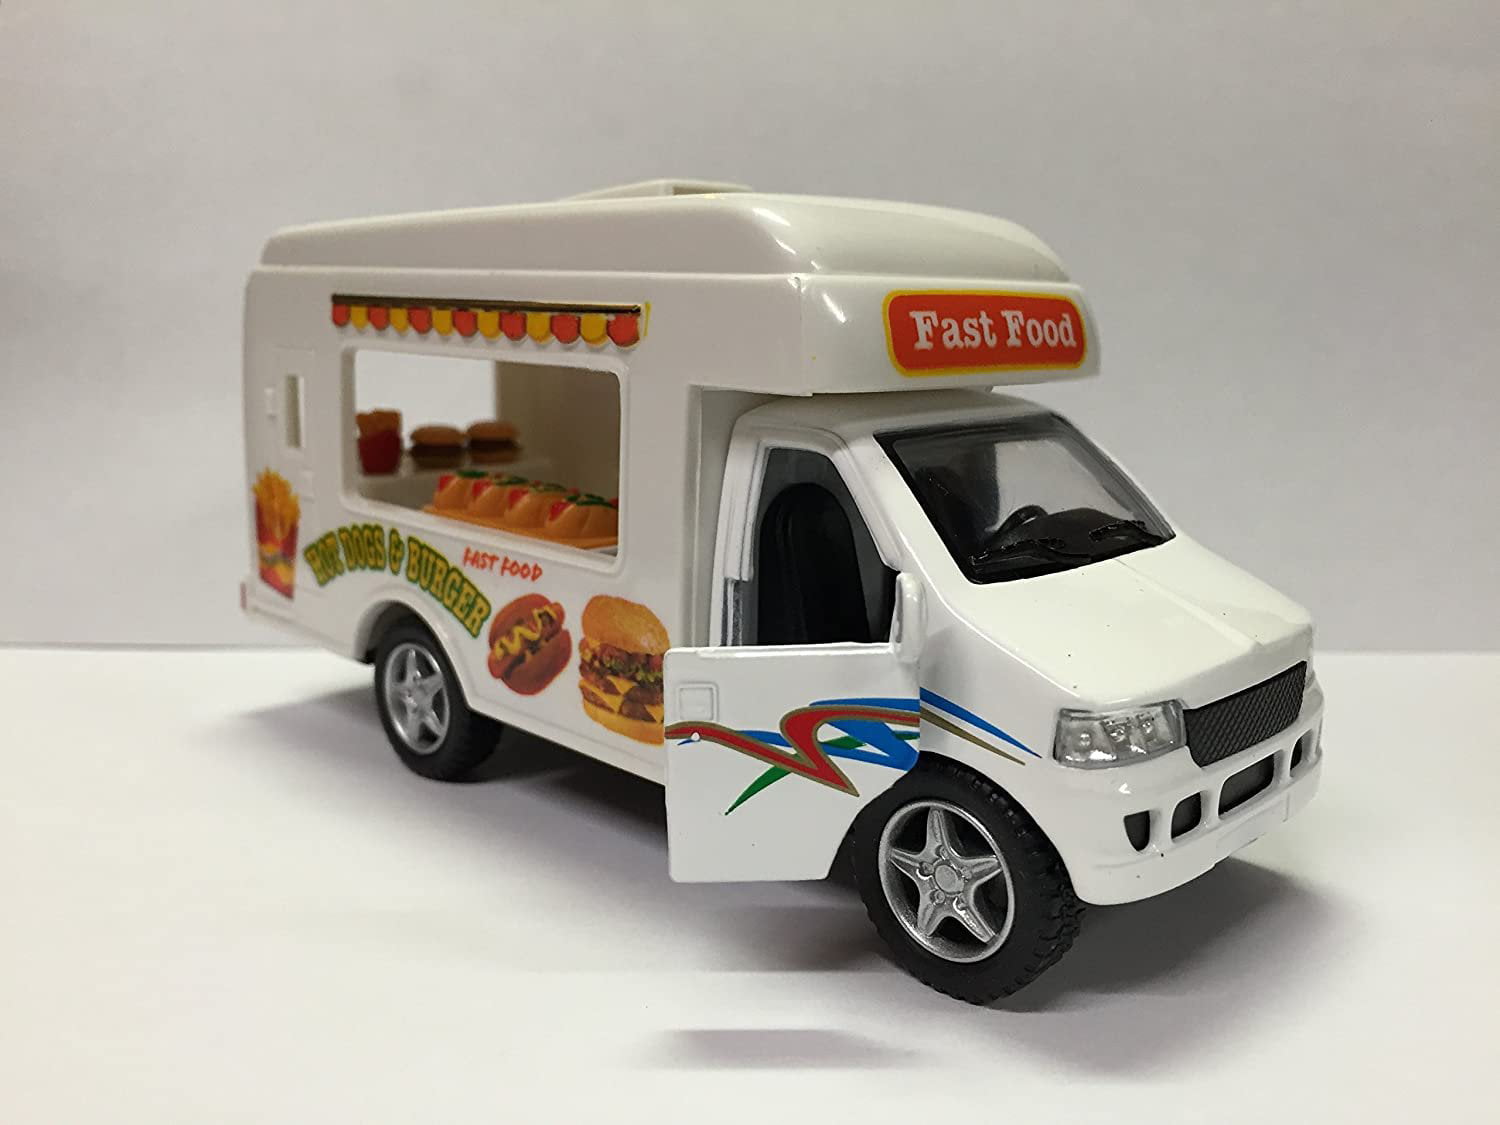 5" Kinsfun Fast Food Lunch Truck Hot Dog Hamburger Van Diecast Model Toy Truck 